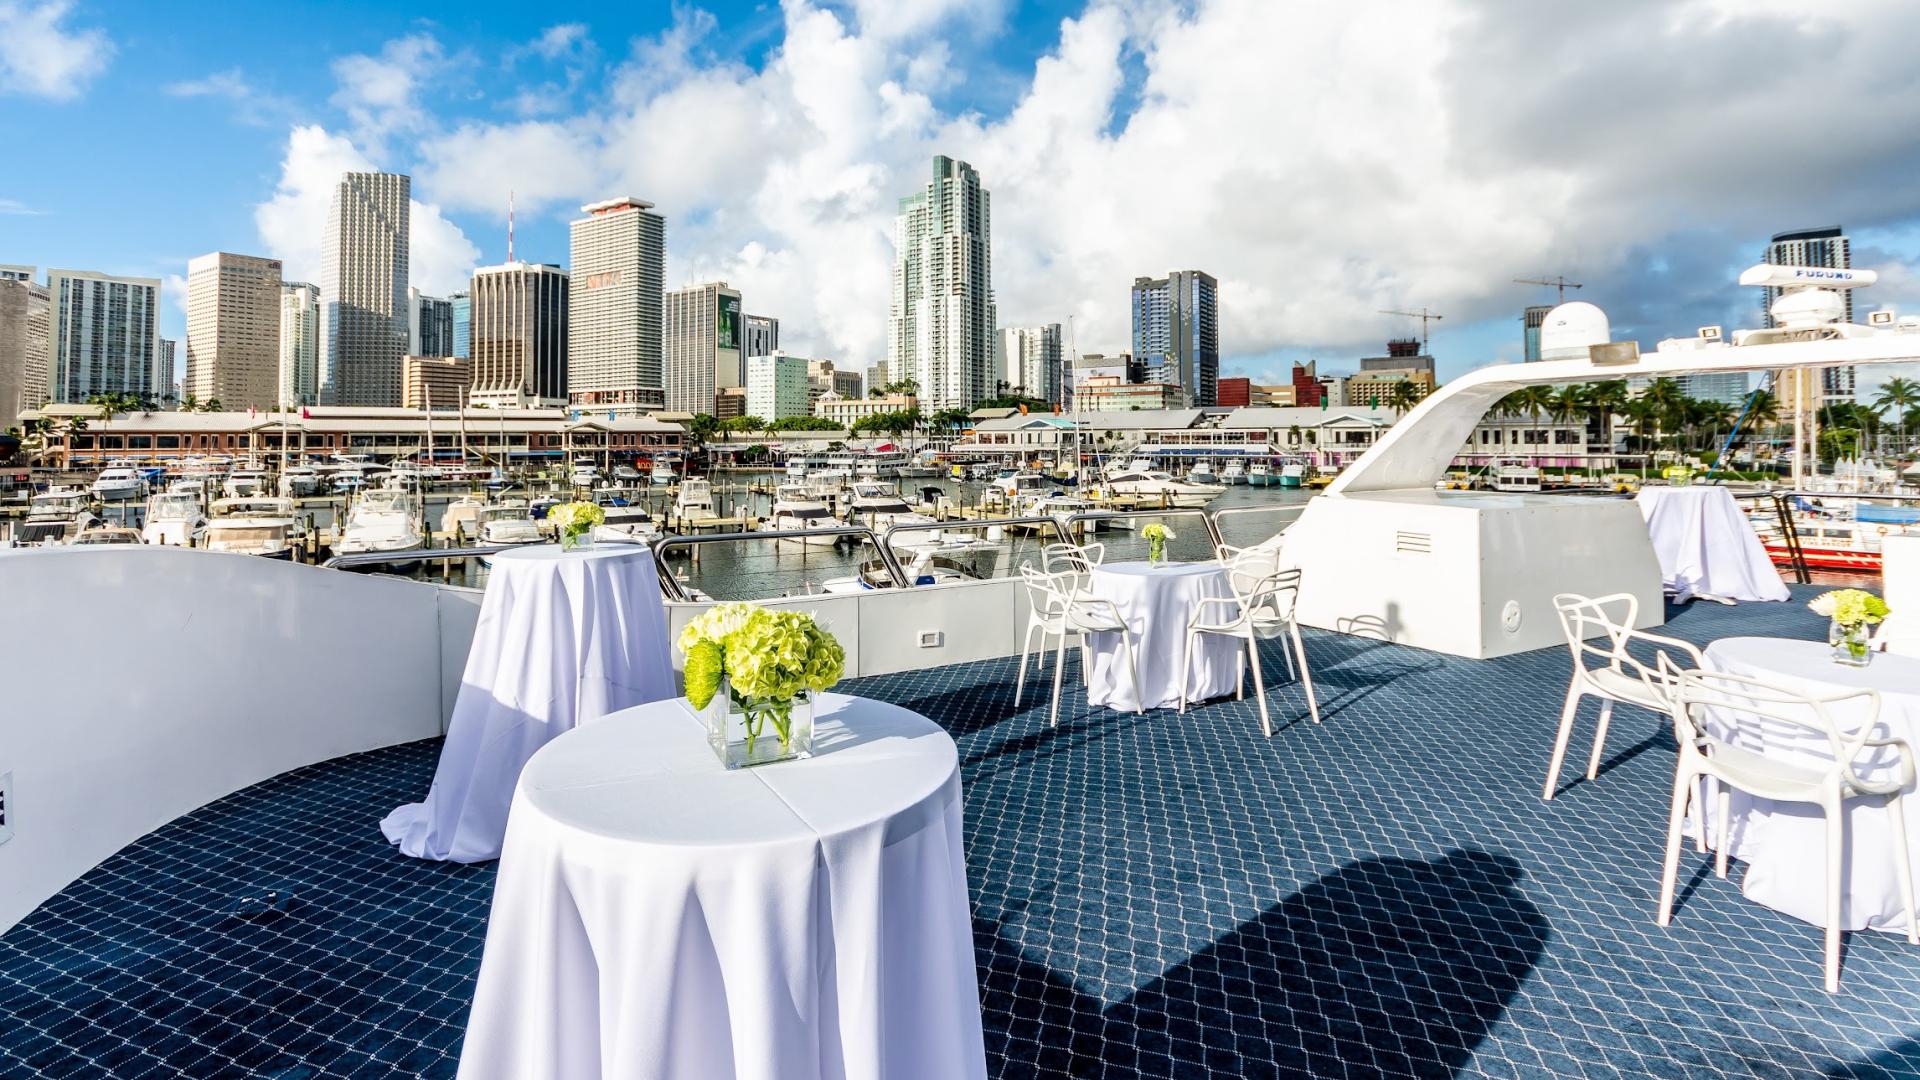 Luxury Wedding Venues for Rent in Miami, FL